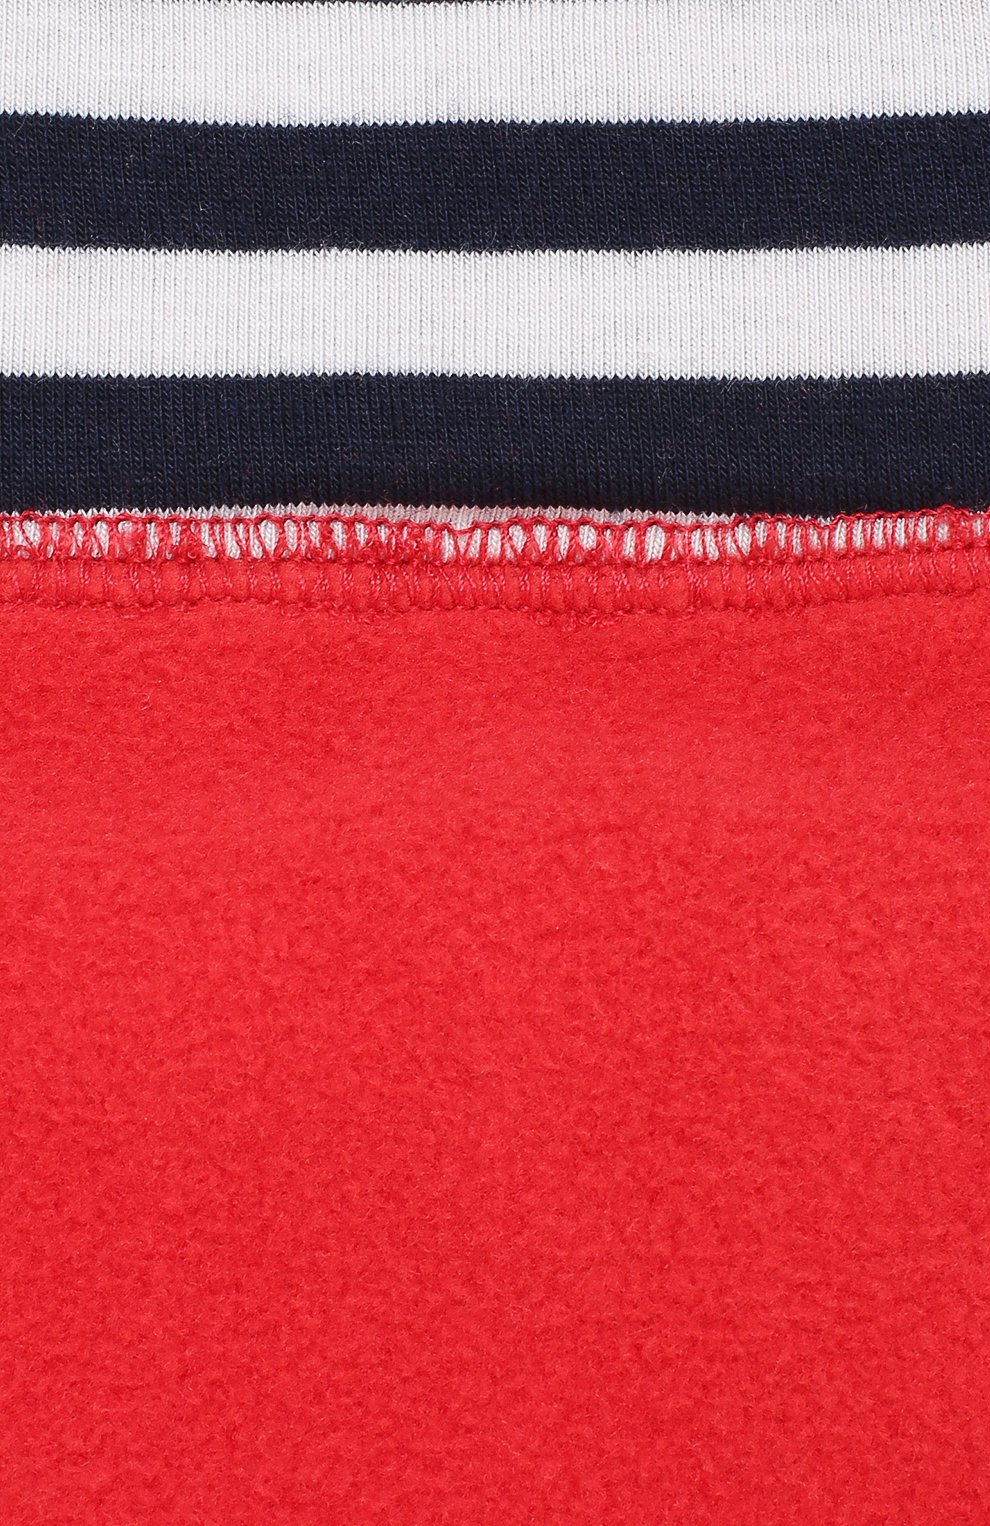 Детские носки для резиновых сапог AIGLE красного цвета, арт. D97131/L0LLYWARM | Фото 2 (Материал: Текстиль, Синтетический материал; Кросс-КТ: Носки; Статус проверки: Проверено, Проверена категория)